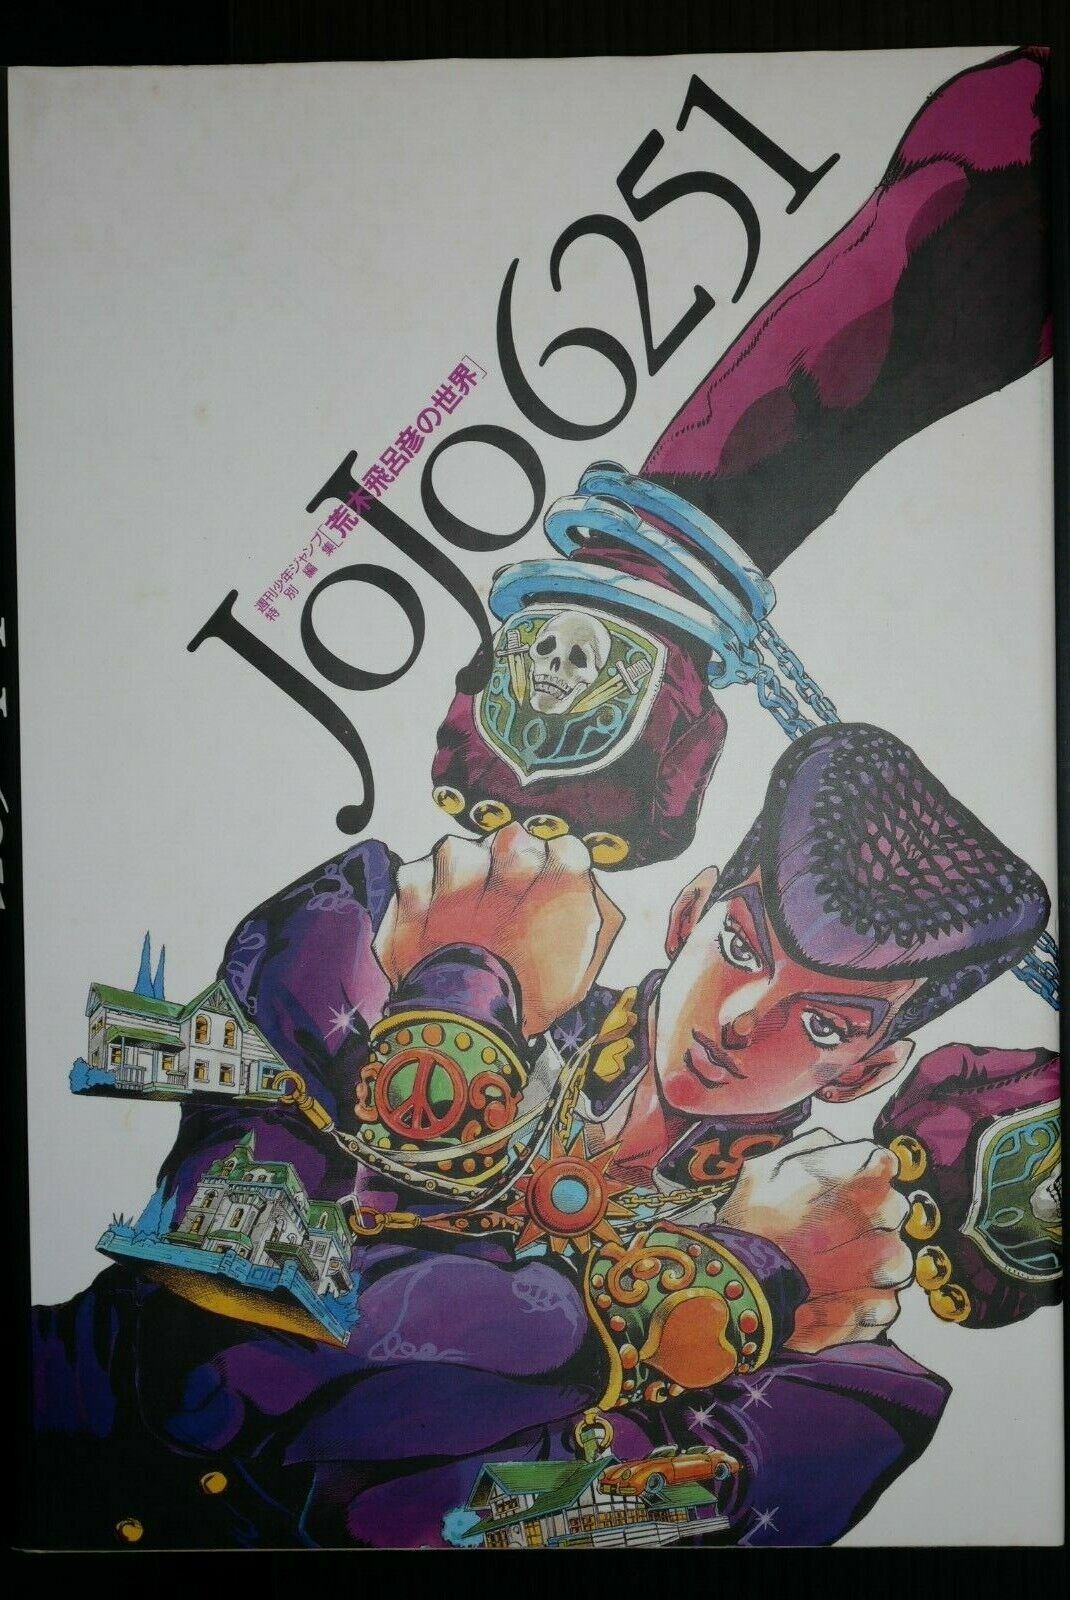 JoJo's Bizarre Adventure Art Book JOJO6251 The World of Hirohiko Araki Japanese